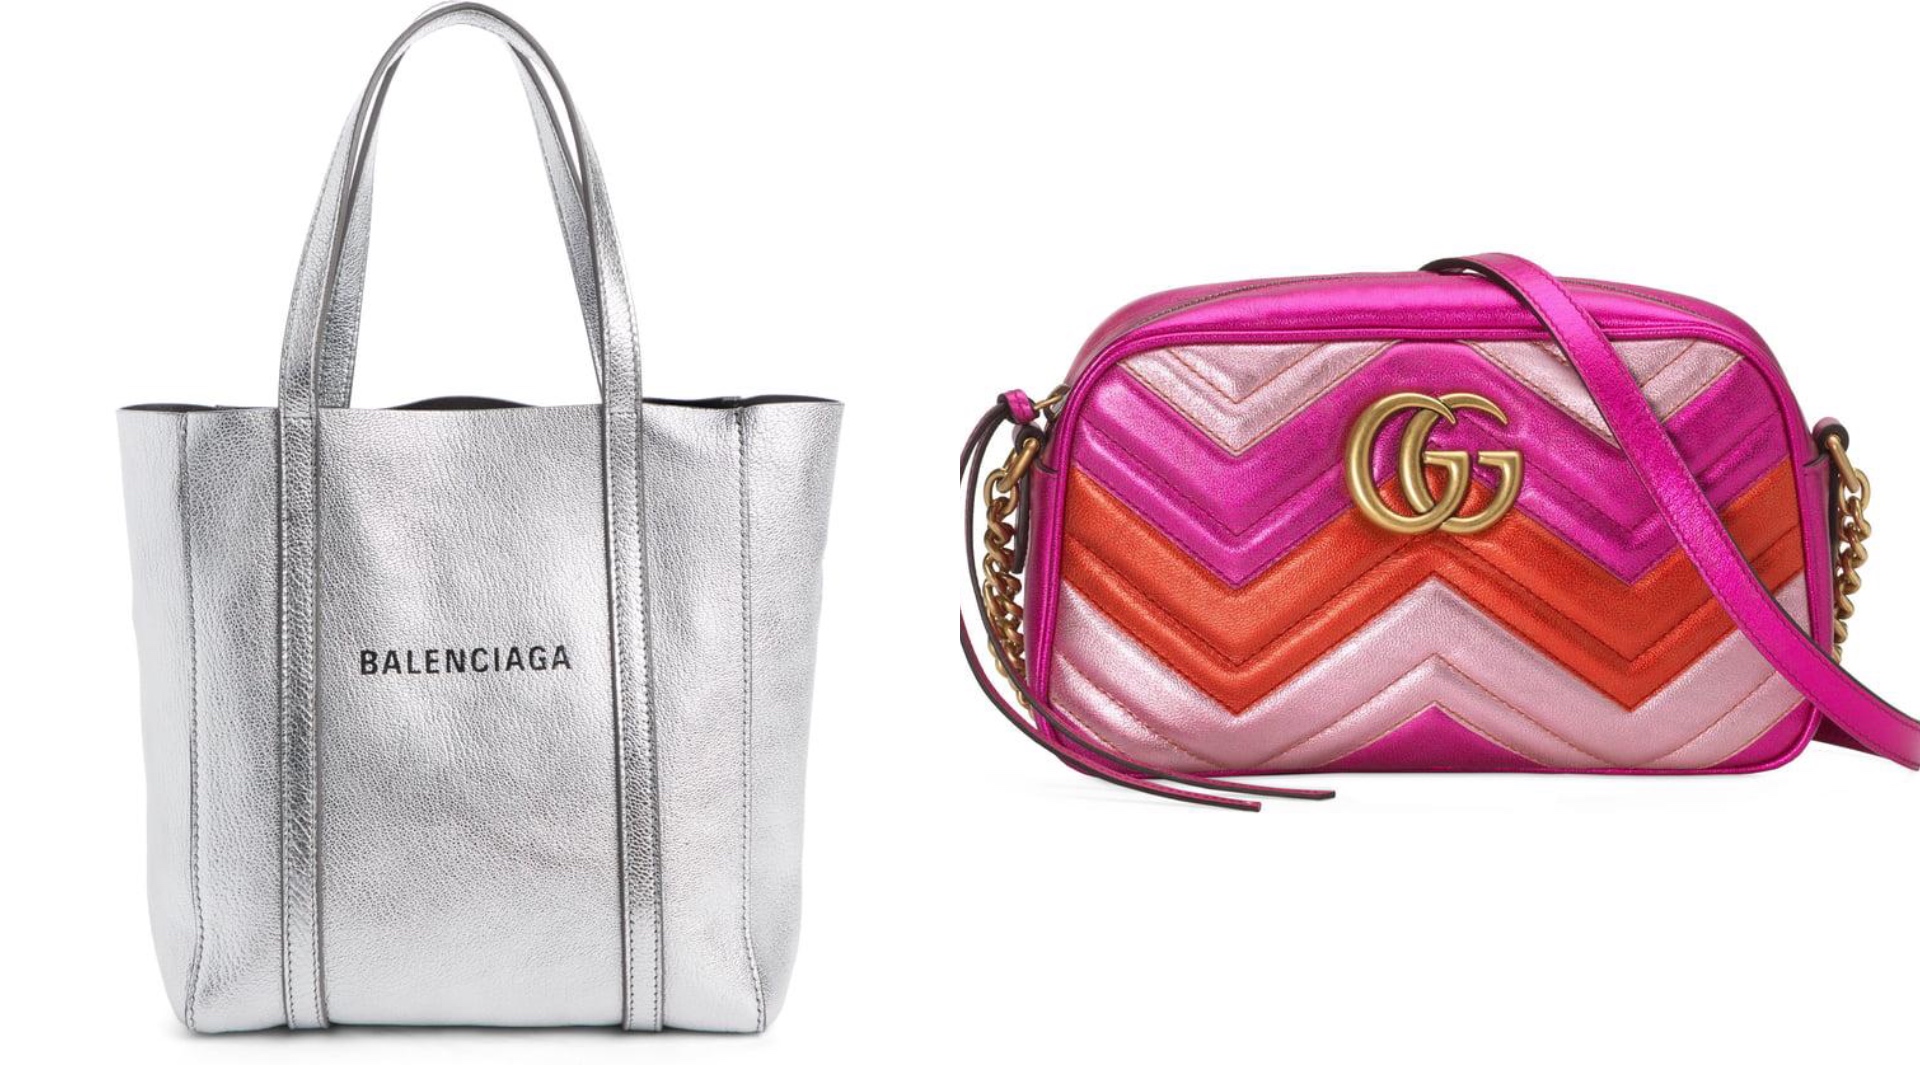 Balenciaga silver tote bag and Gucci rainbow metallic handbag